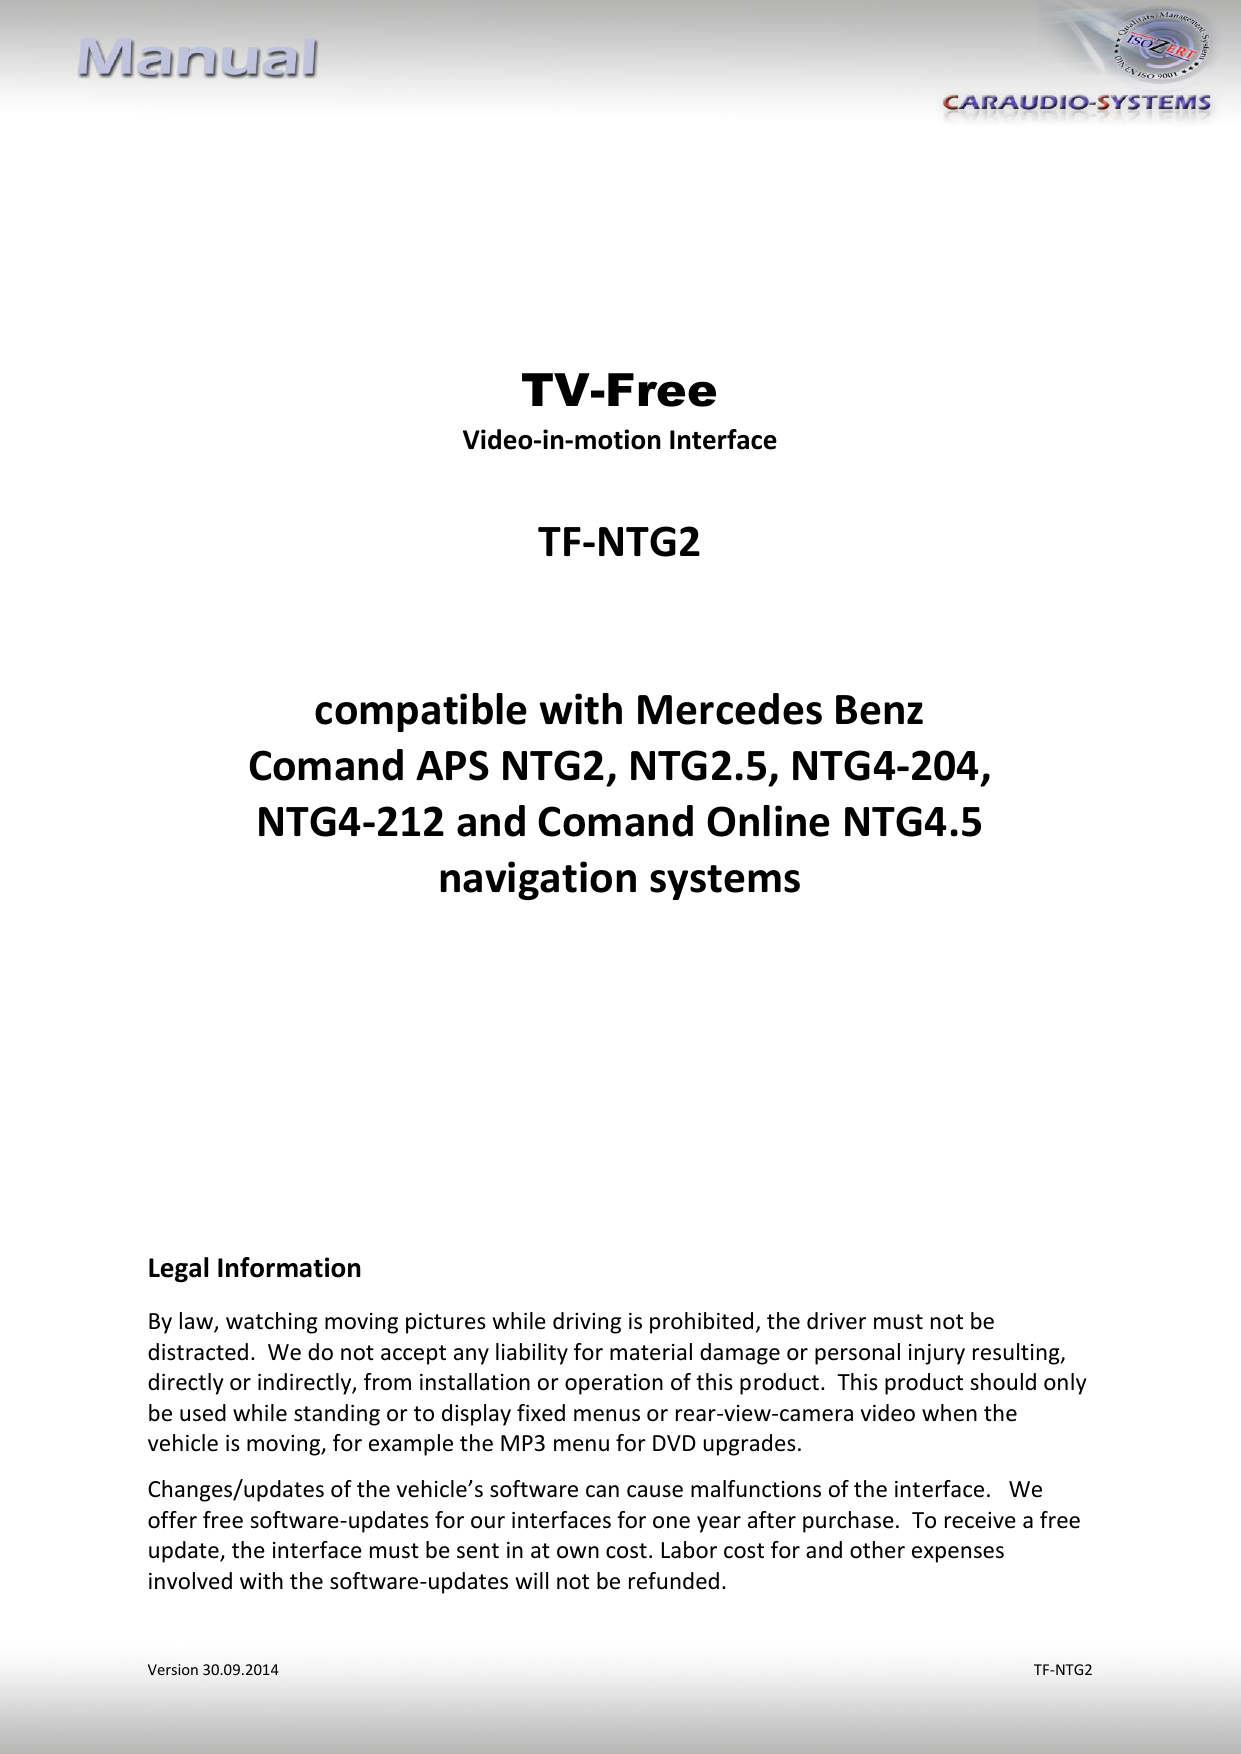 comand aps ntg4 software update